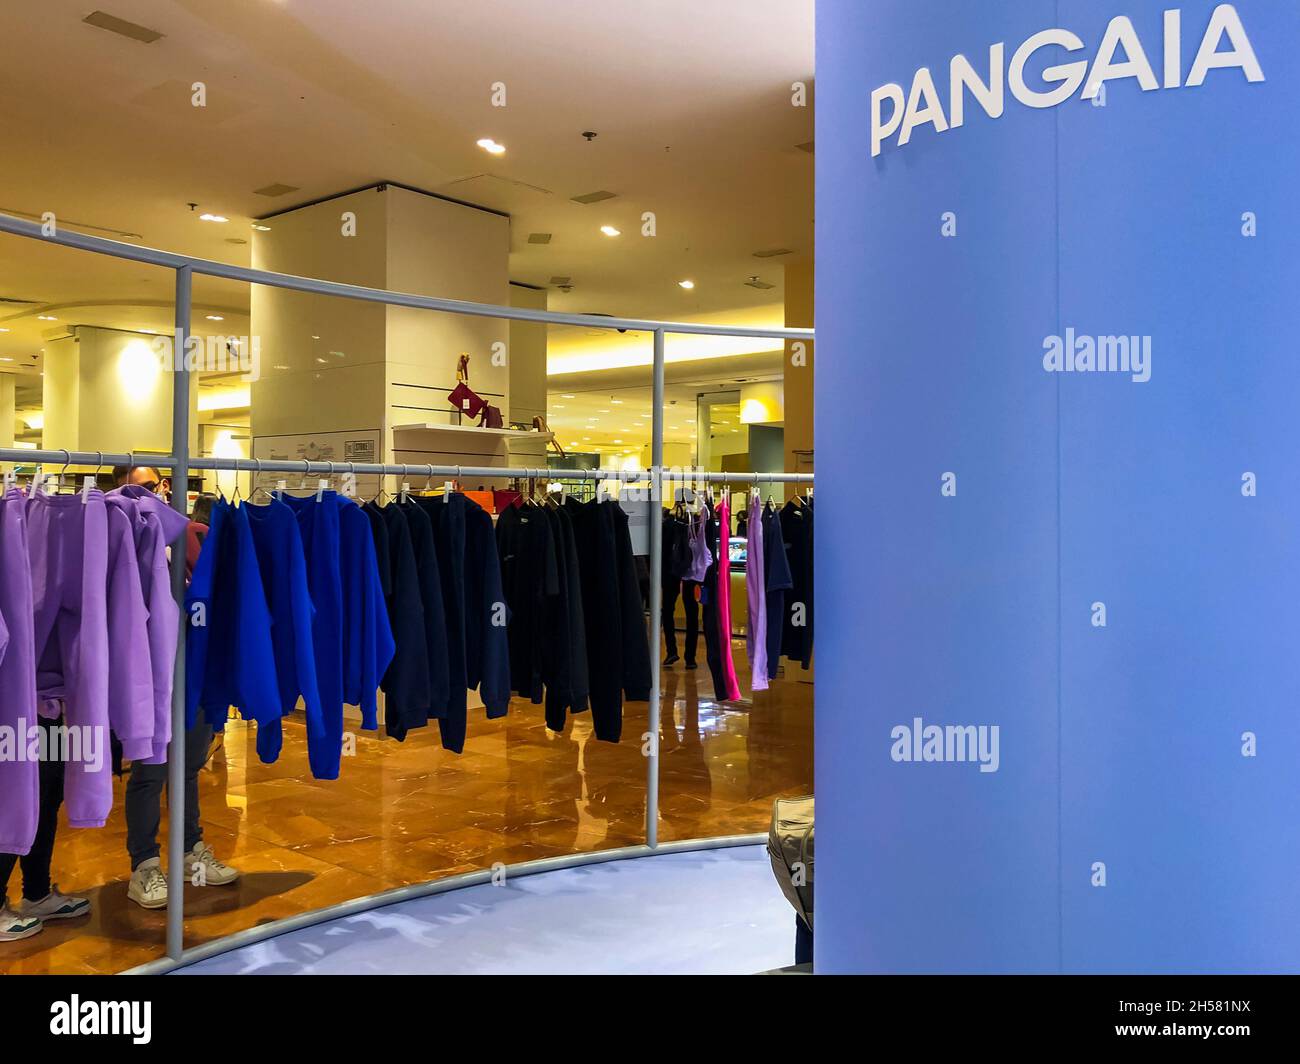 Paris, France, Concept Clothing Store, Galeries Lafayette Department Store,  Pangaia, sign, clothes shop interior Stock Photo - Alamy